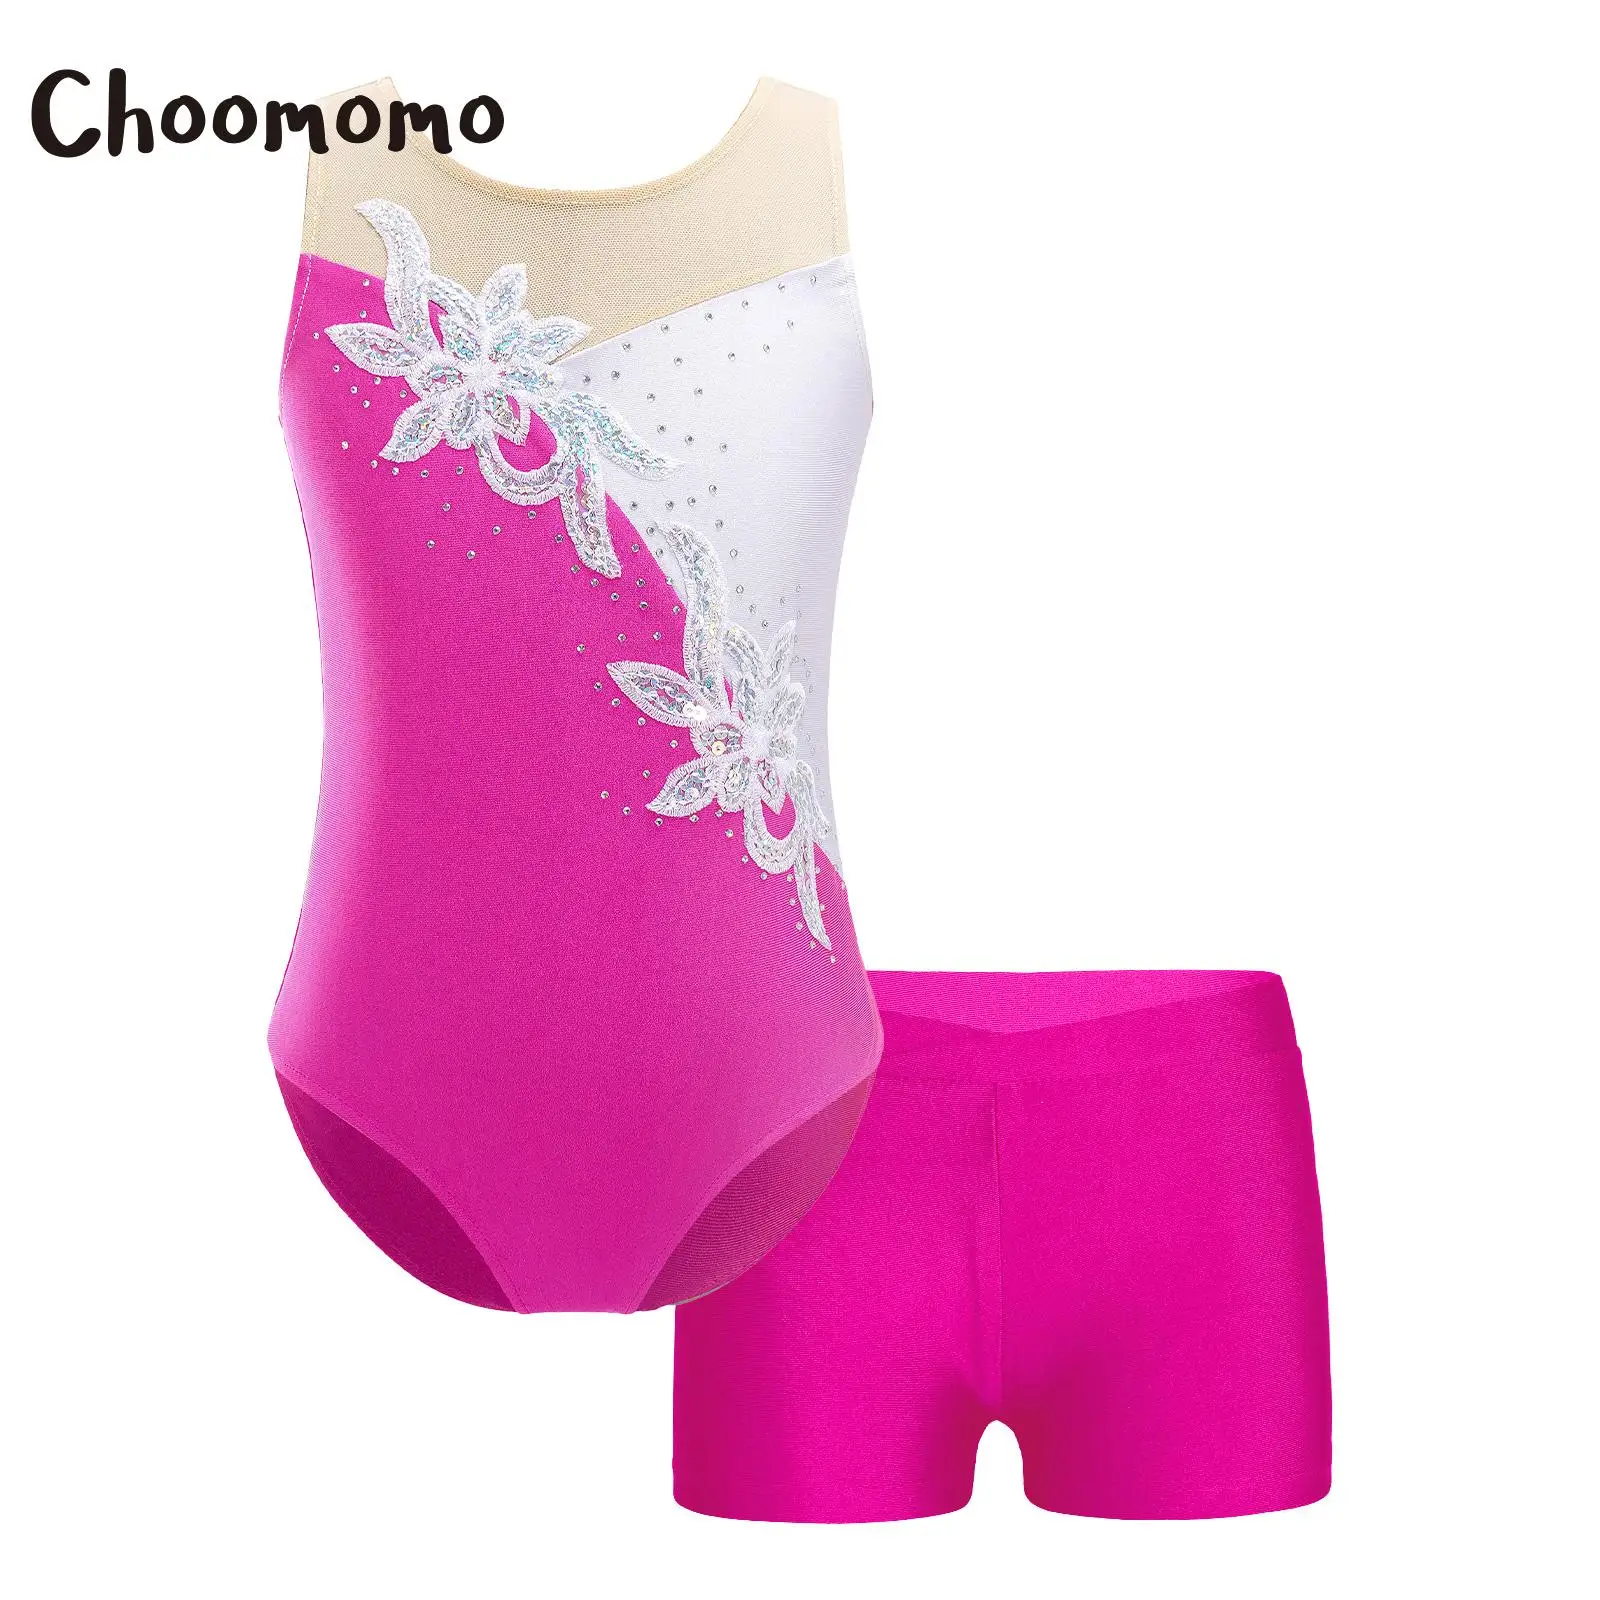 

Choomomo Kids Girls 4-14 Sleeveless Skating Dance Leotards and V-front Shorts with Sequins Rhinestones Adorned Decor Gymnastics